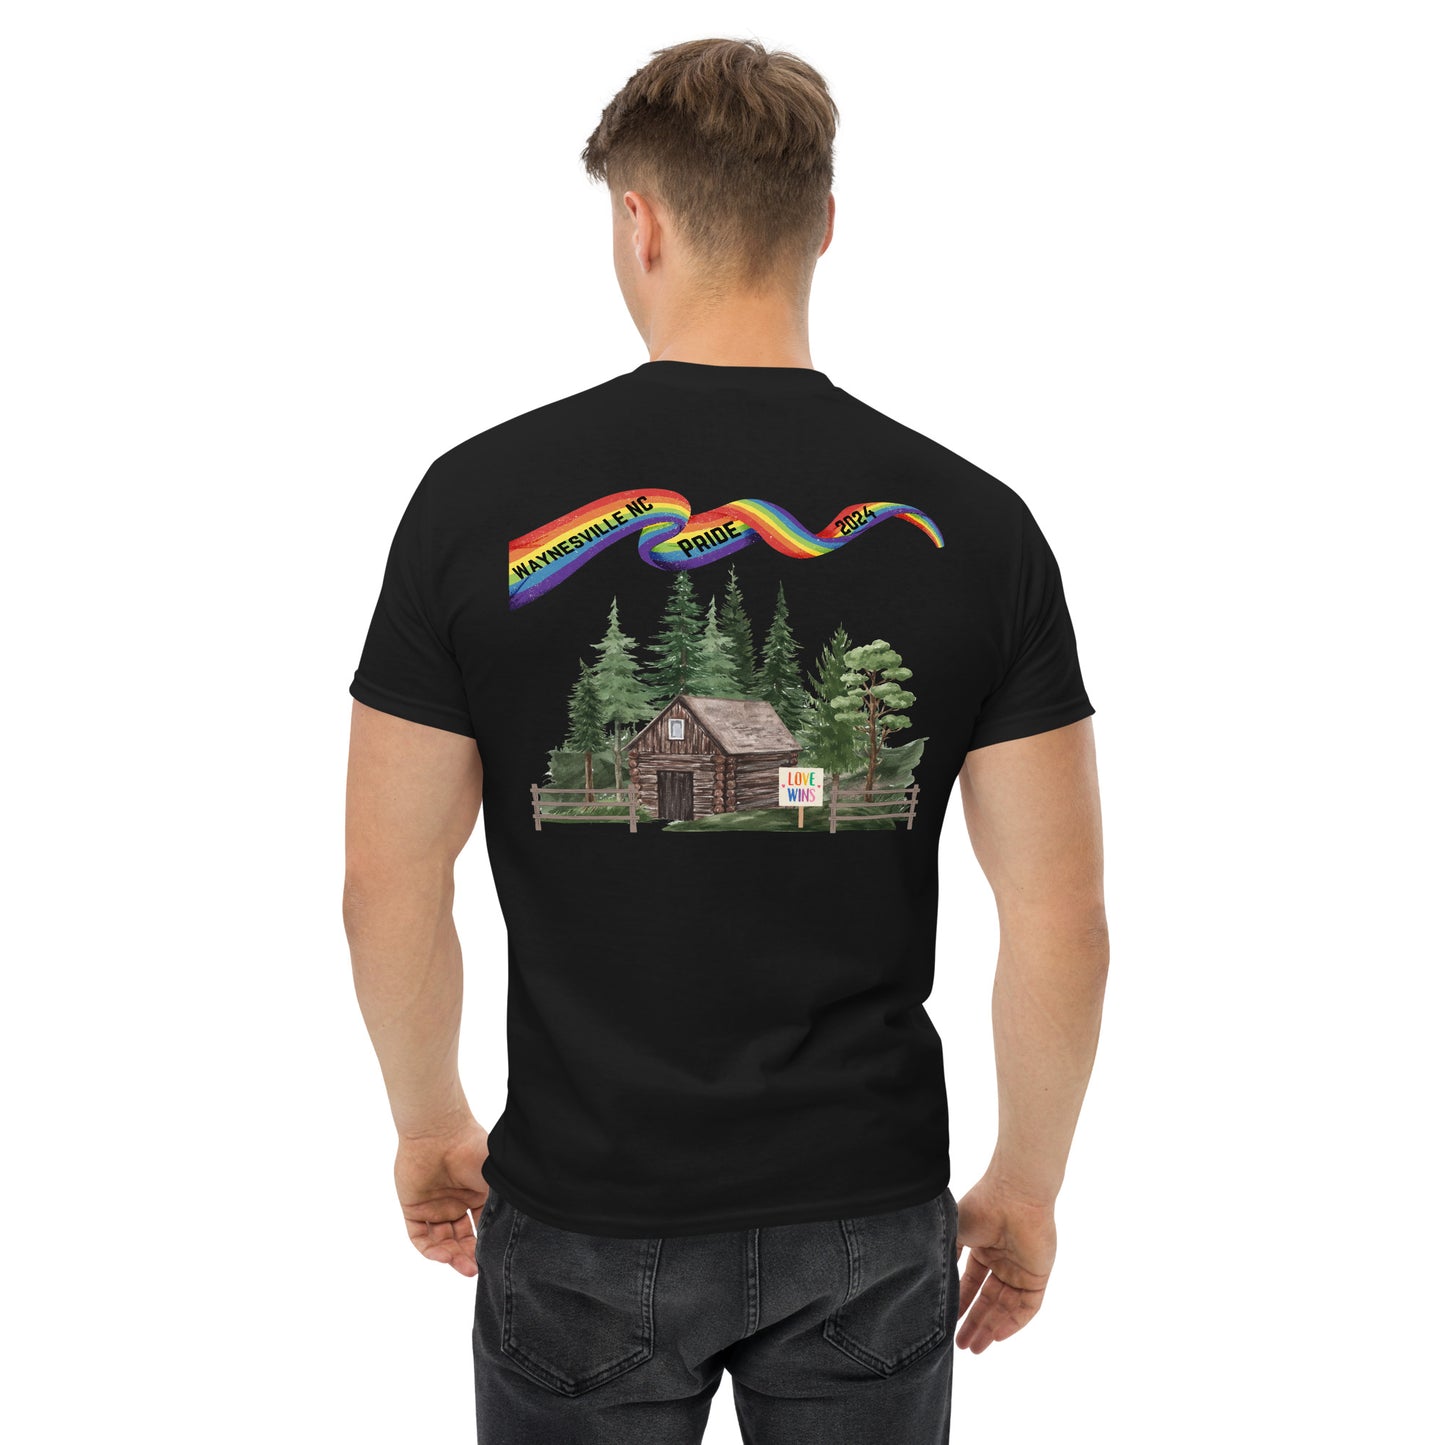 Mountain Cabin Pride T-Shirt: Exclusive Design for Waynesville's 1st Annual Pride Event